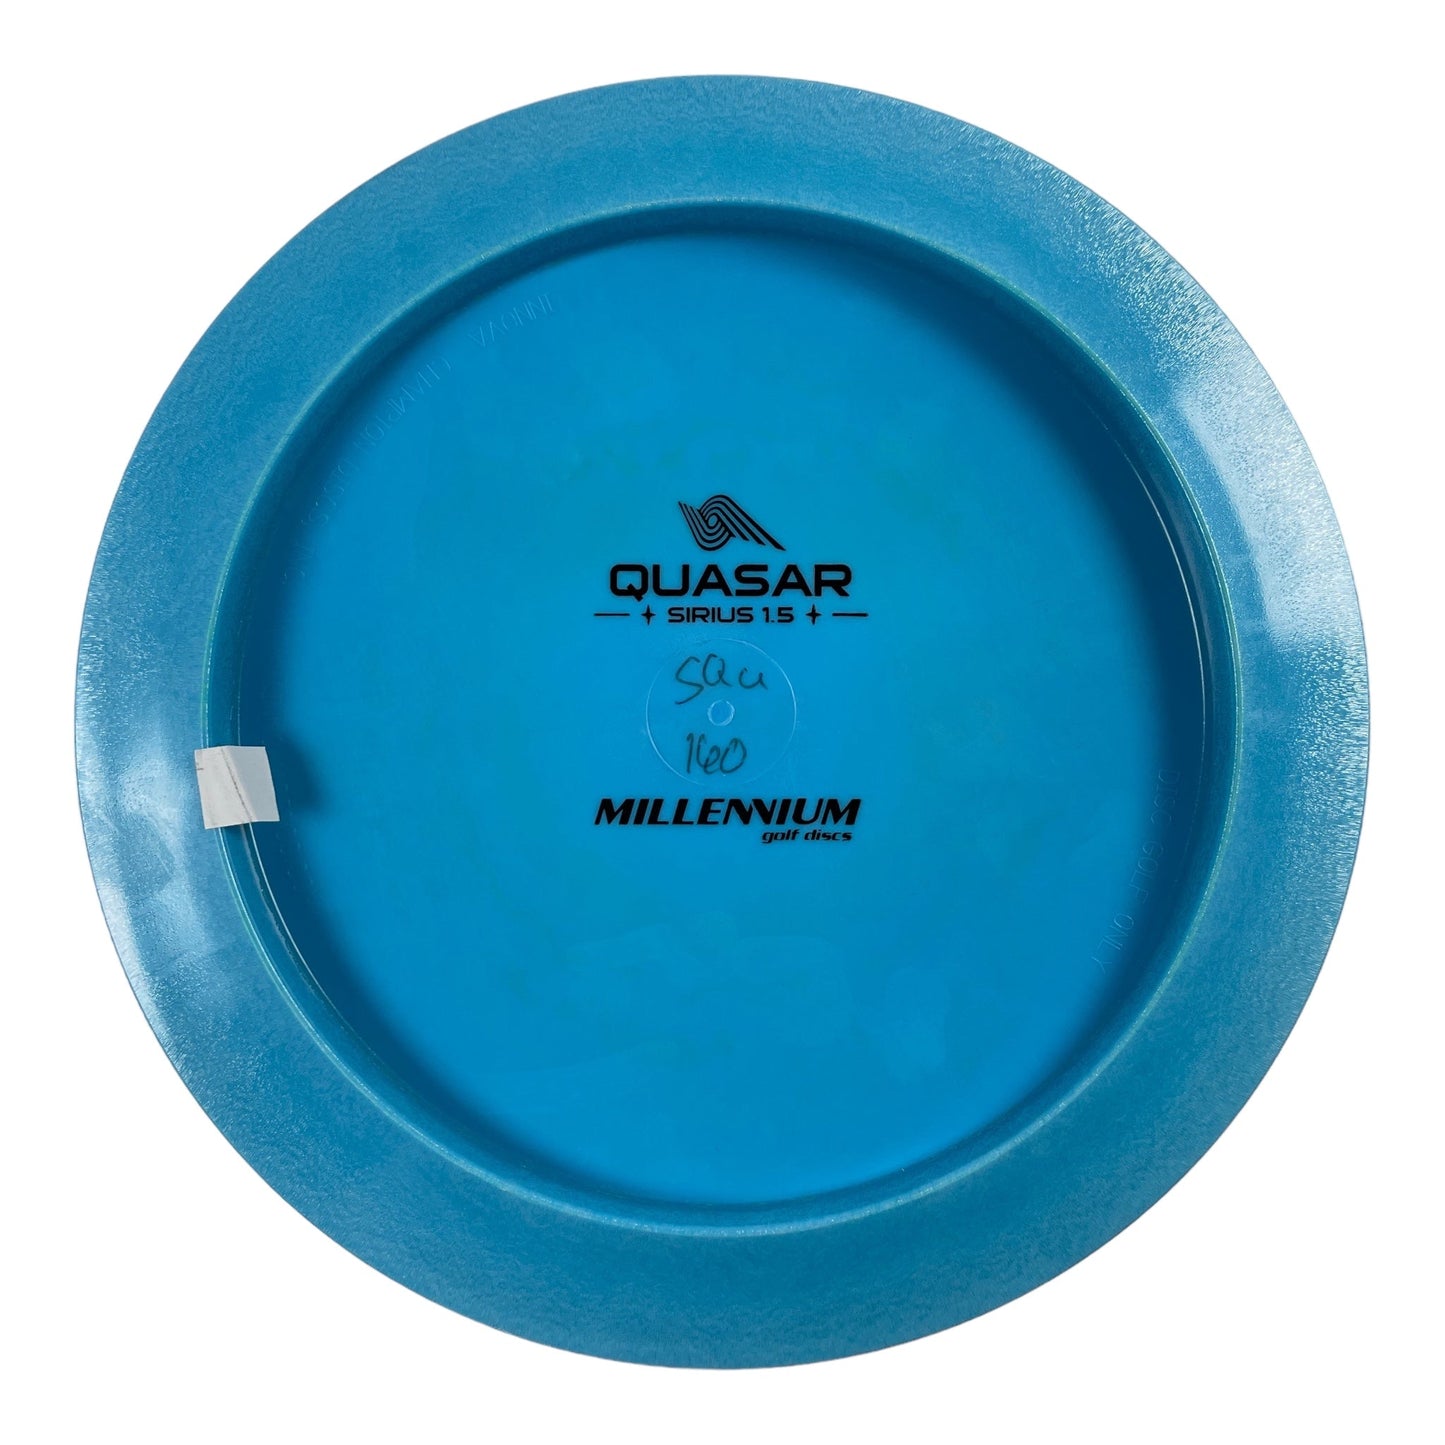 Millennium Golf Discs Quasar | Sirius | Blue/Black 160g Disc Golf